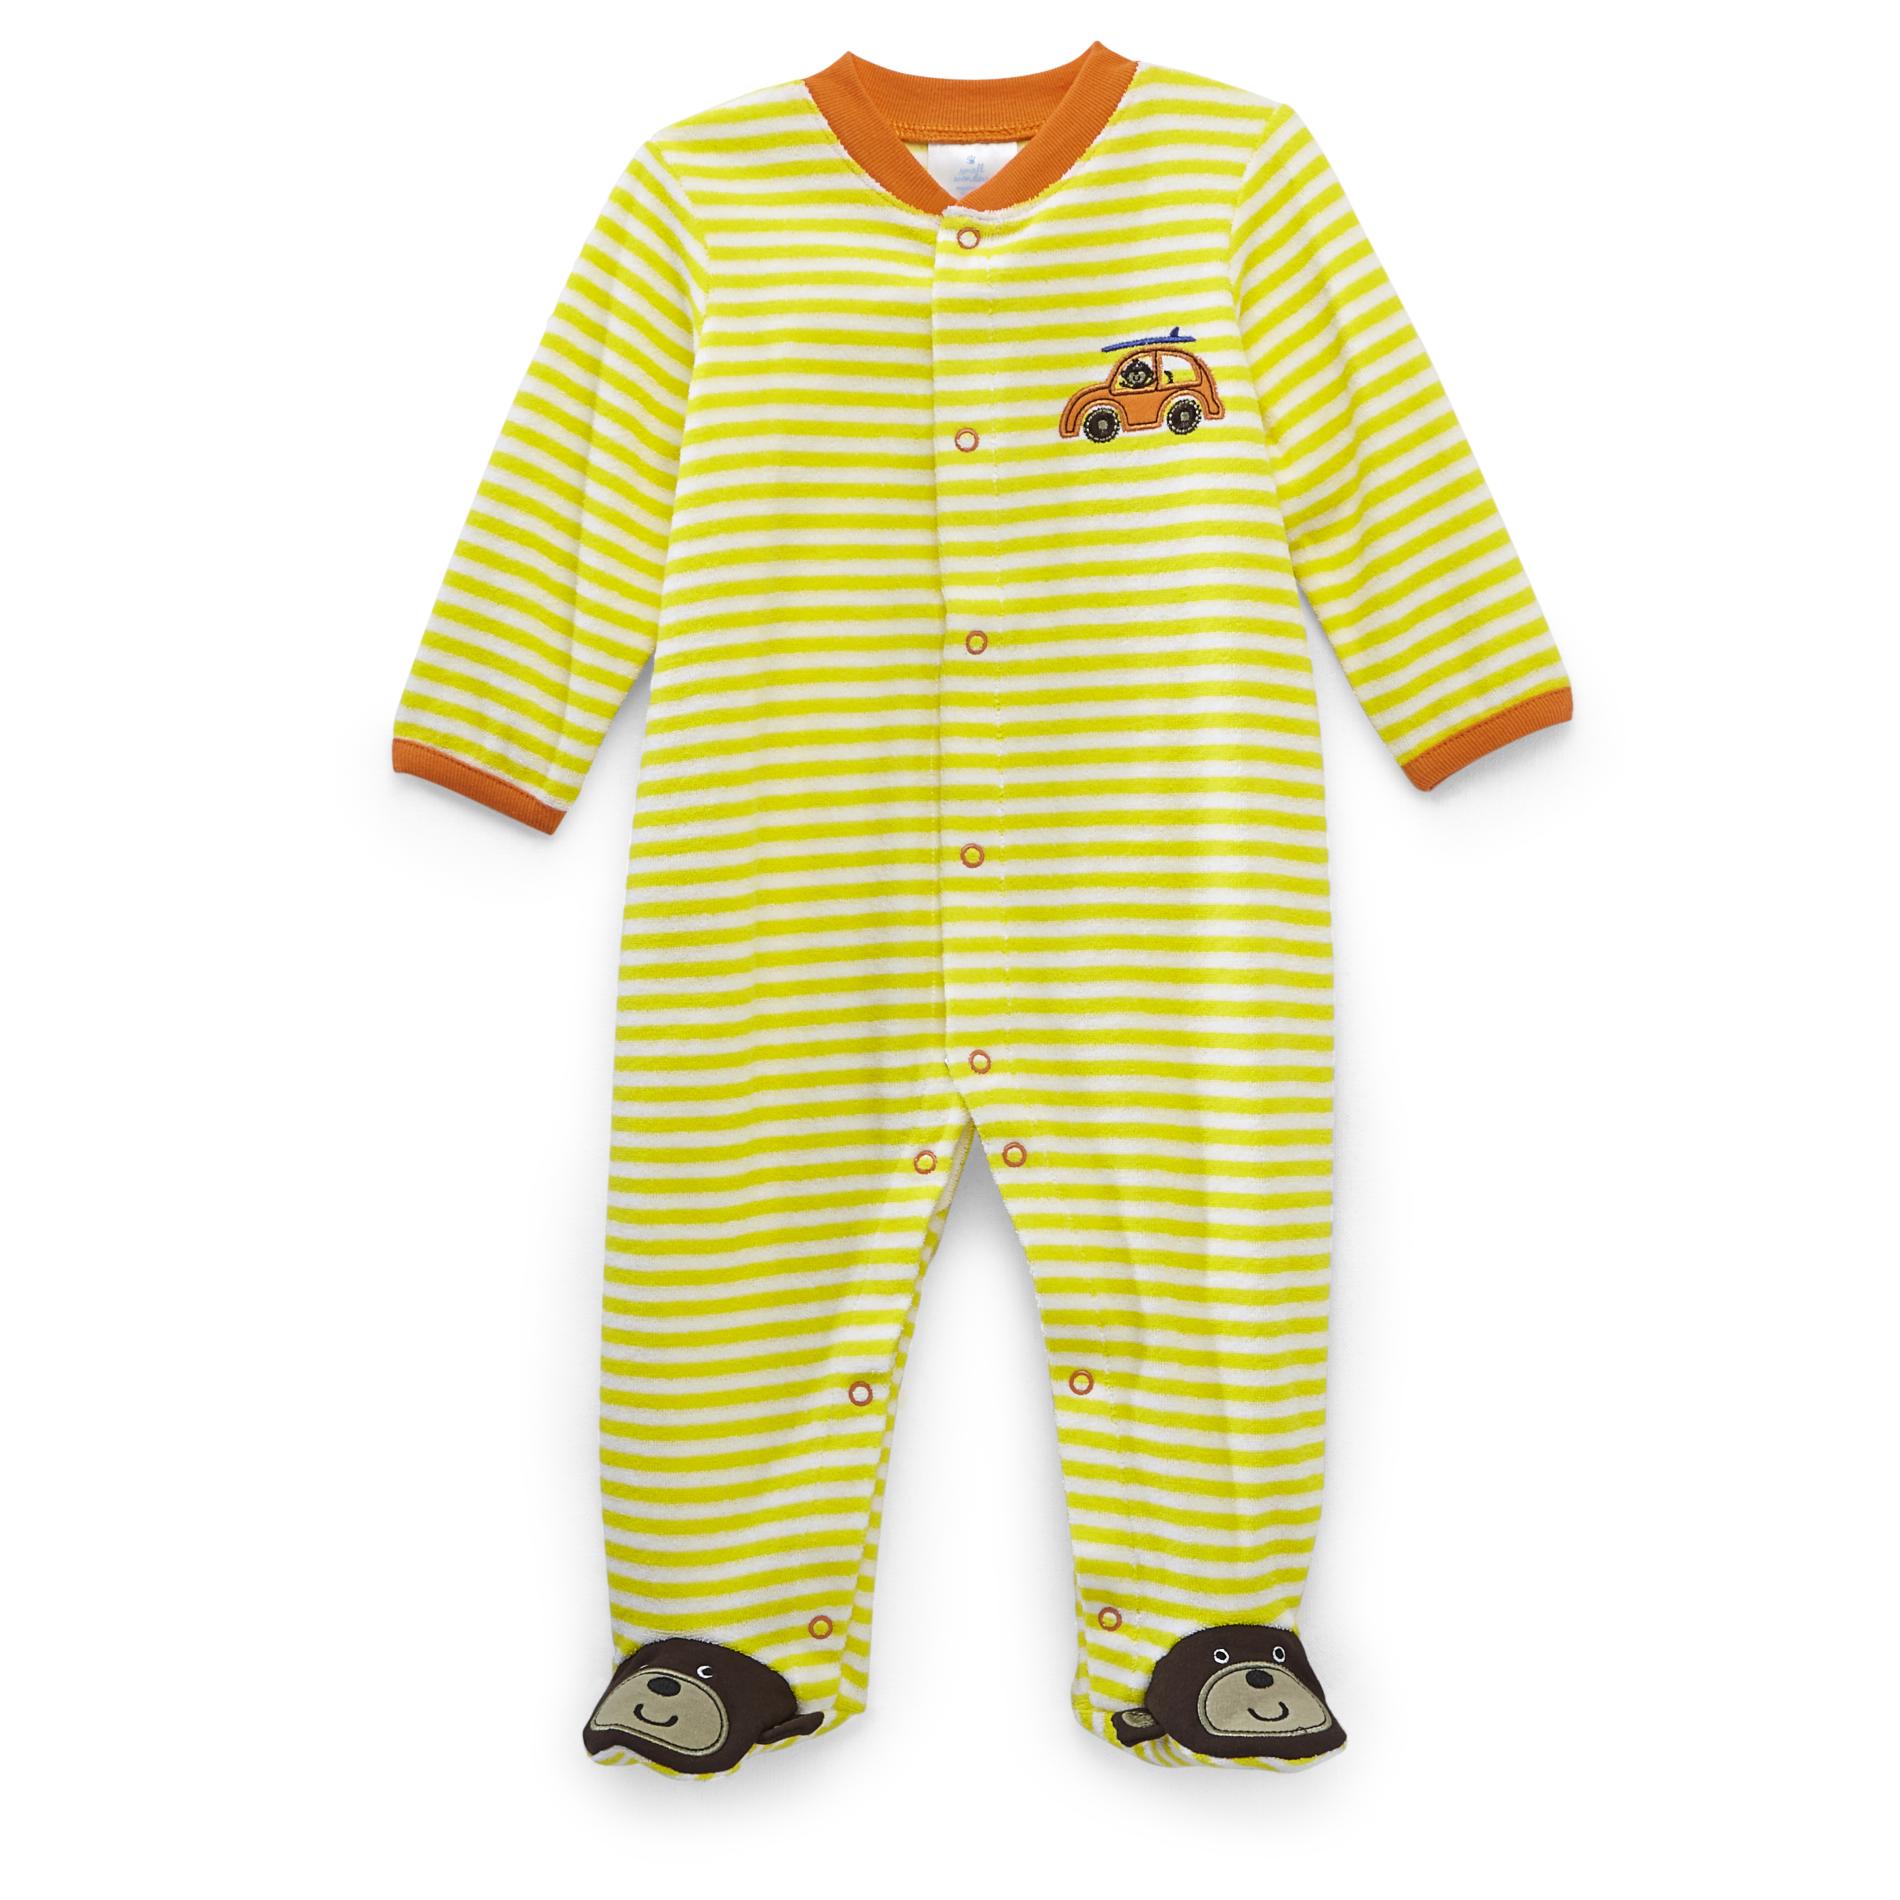 Small Wonders Newborn Boy's Footed Pajama Sleeper - Car & Monkey